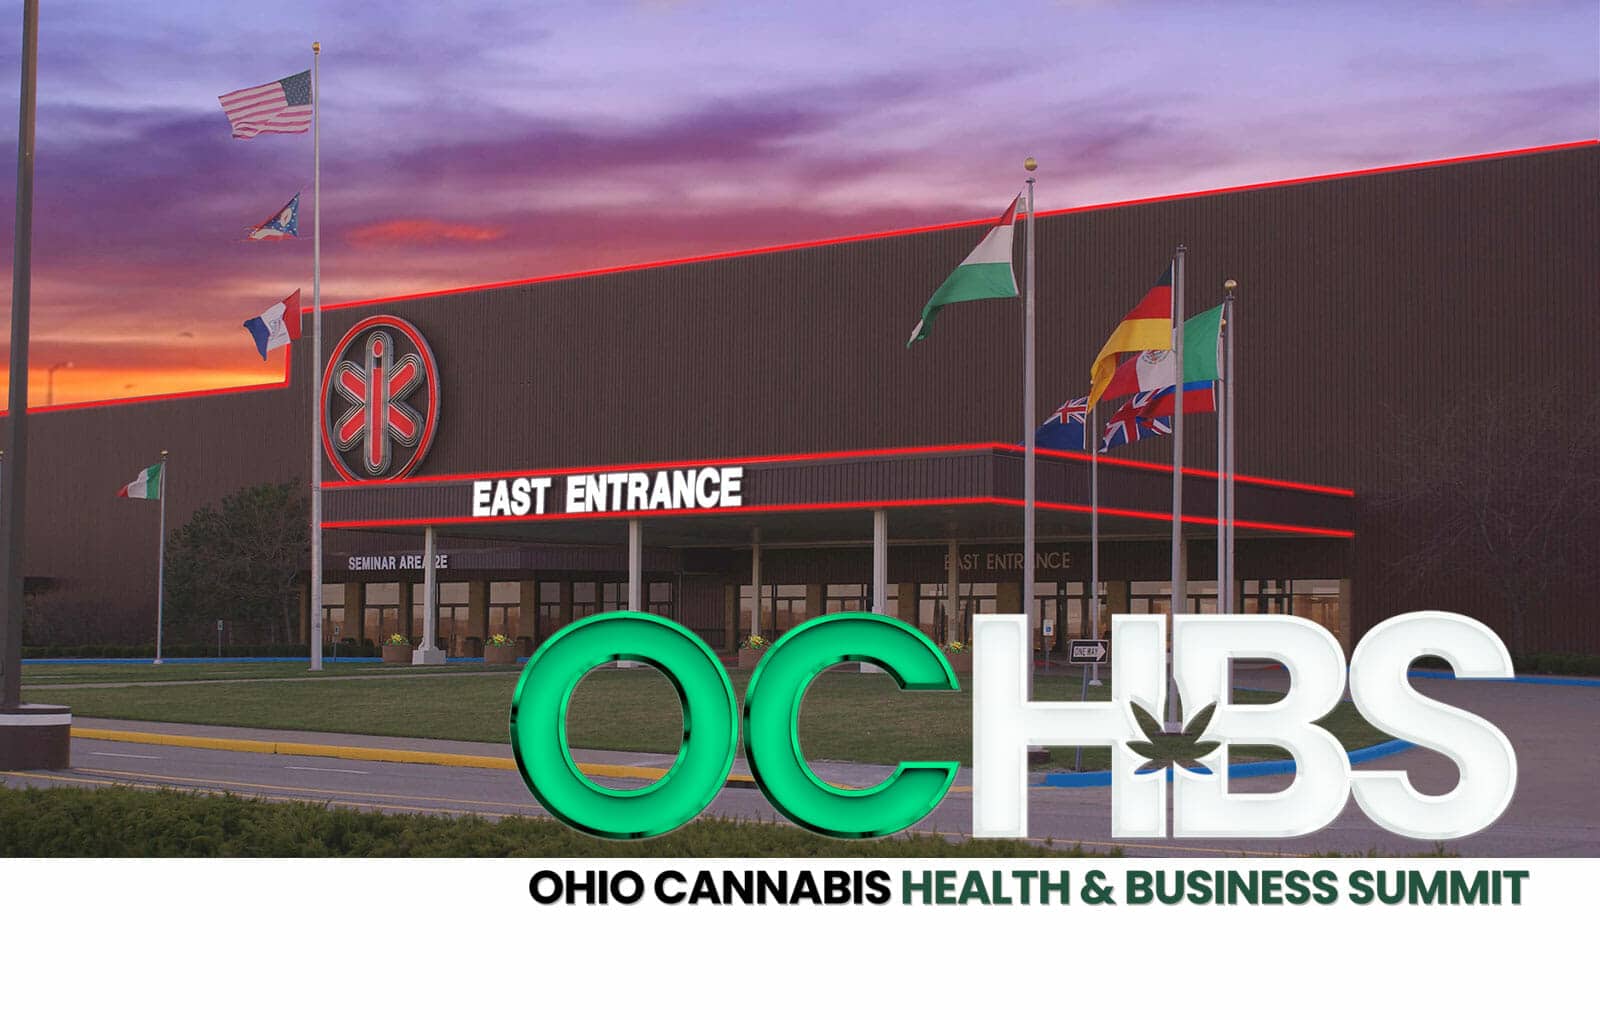 Ohio Cannabis Health & Business Summit IX Center East Entrance